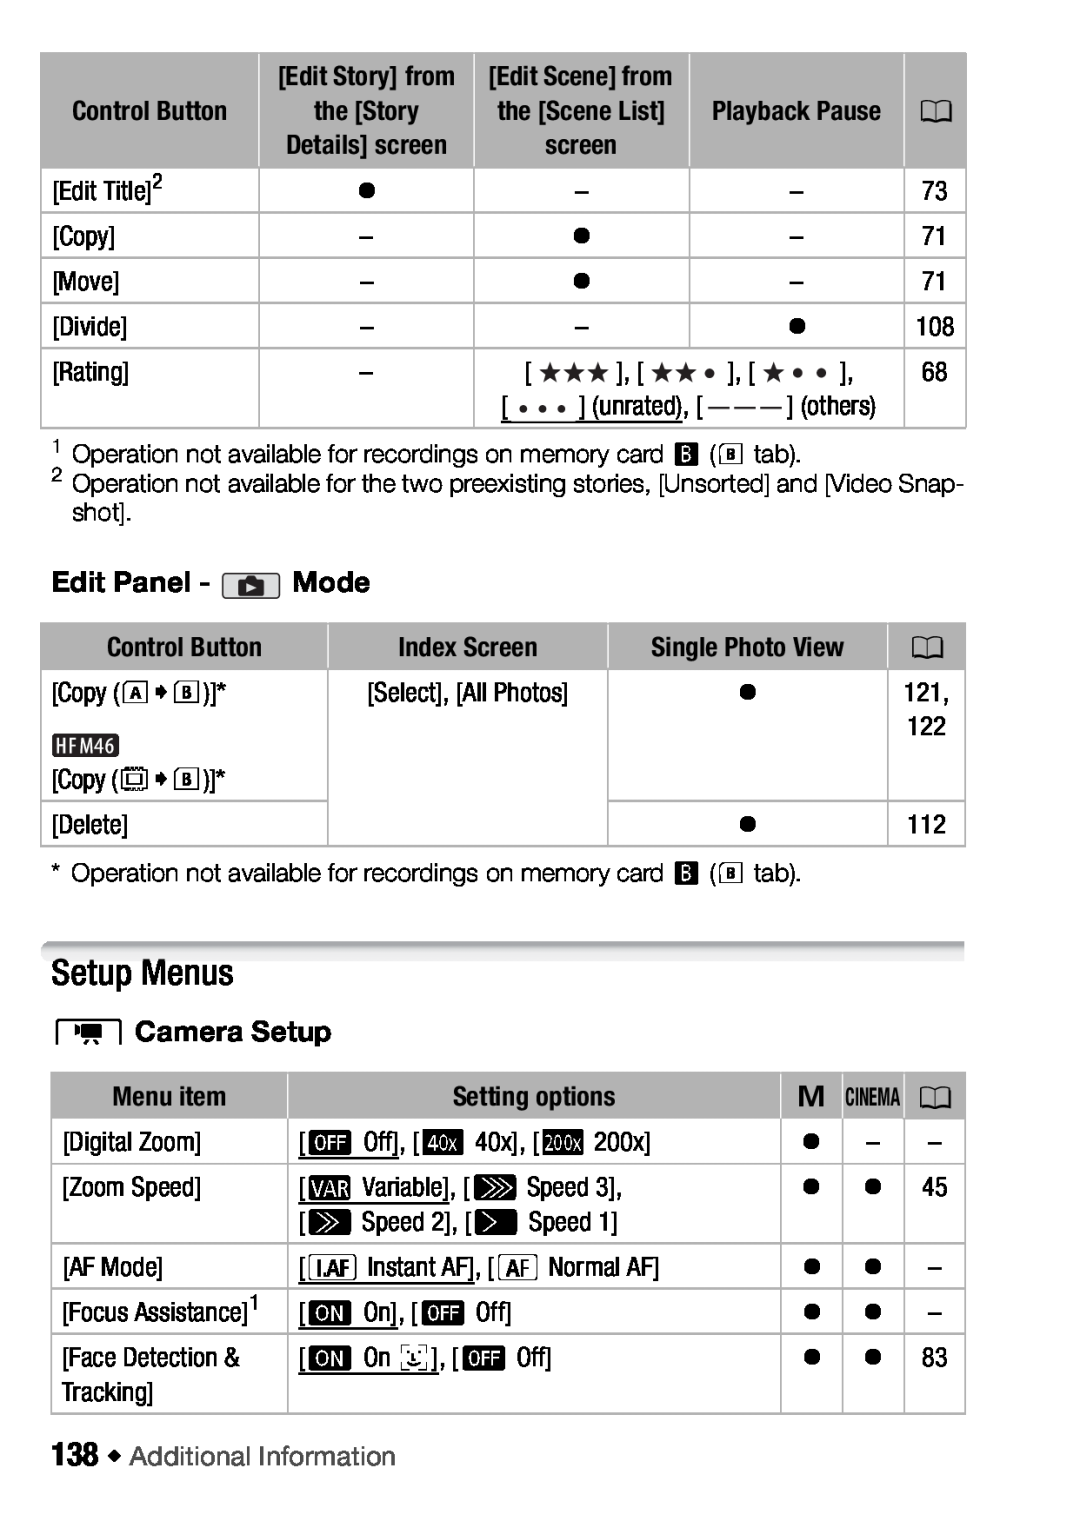 Canon HFM406 Setup Menus, 7Camera Setup, Edit Panel - Mode, Control Button, Index Screen, Single Photo View, Menu item 